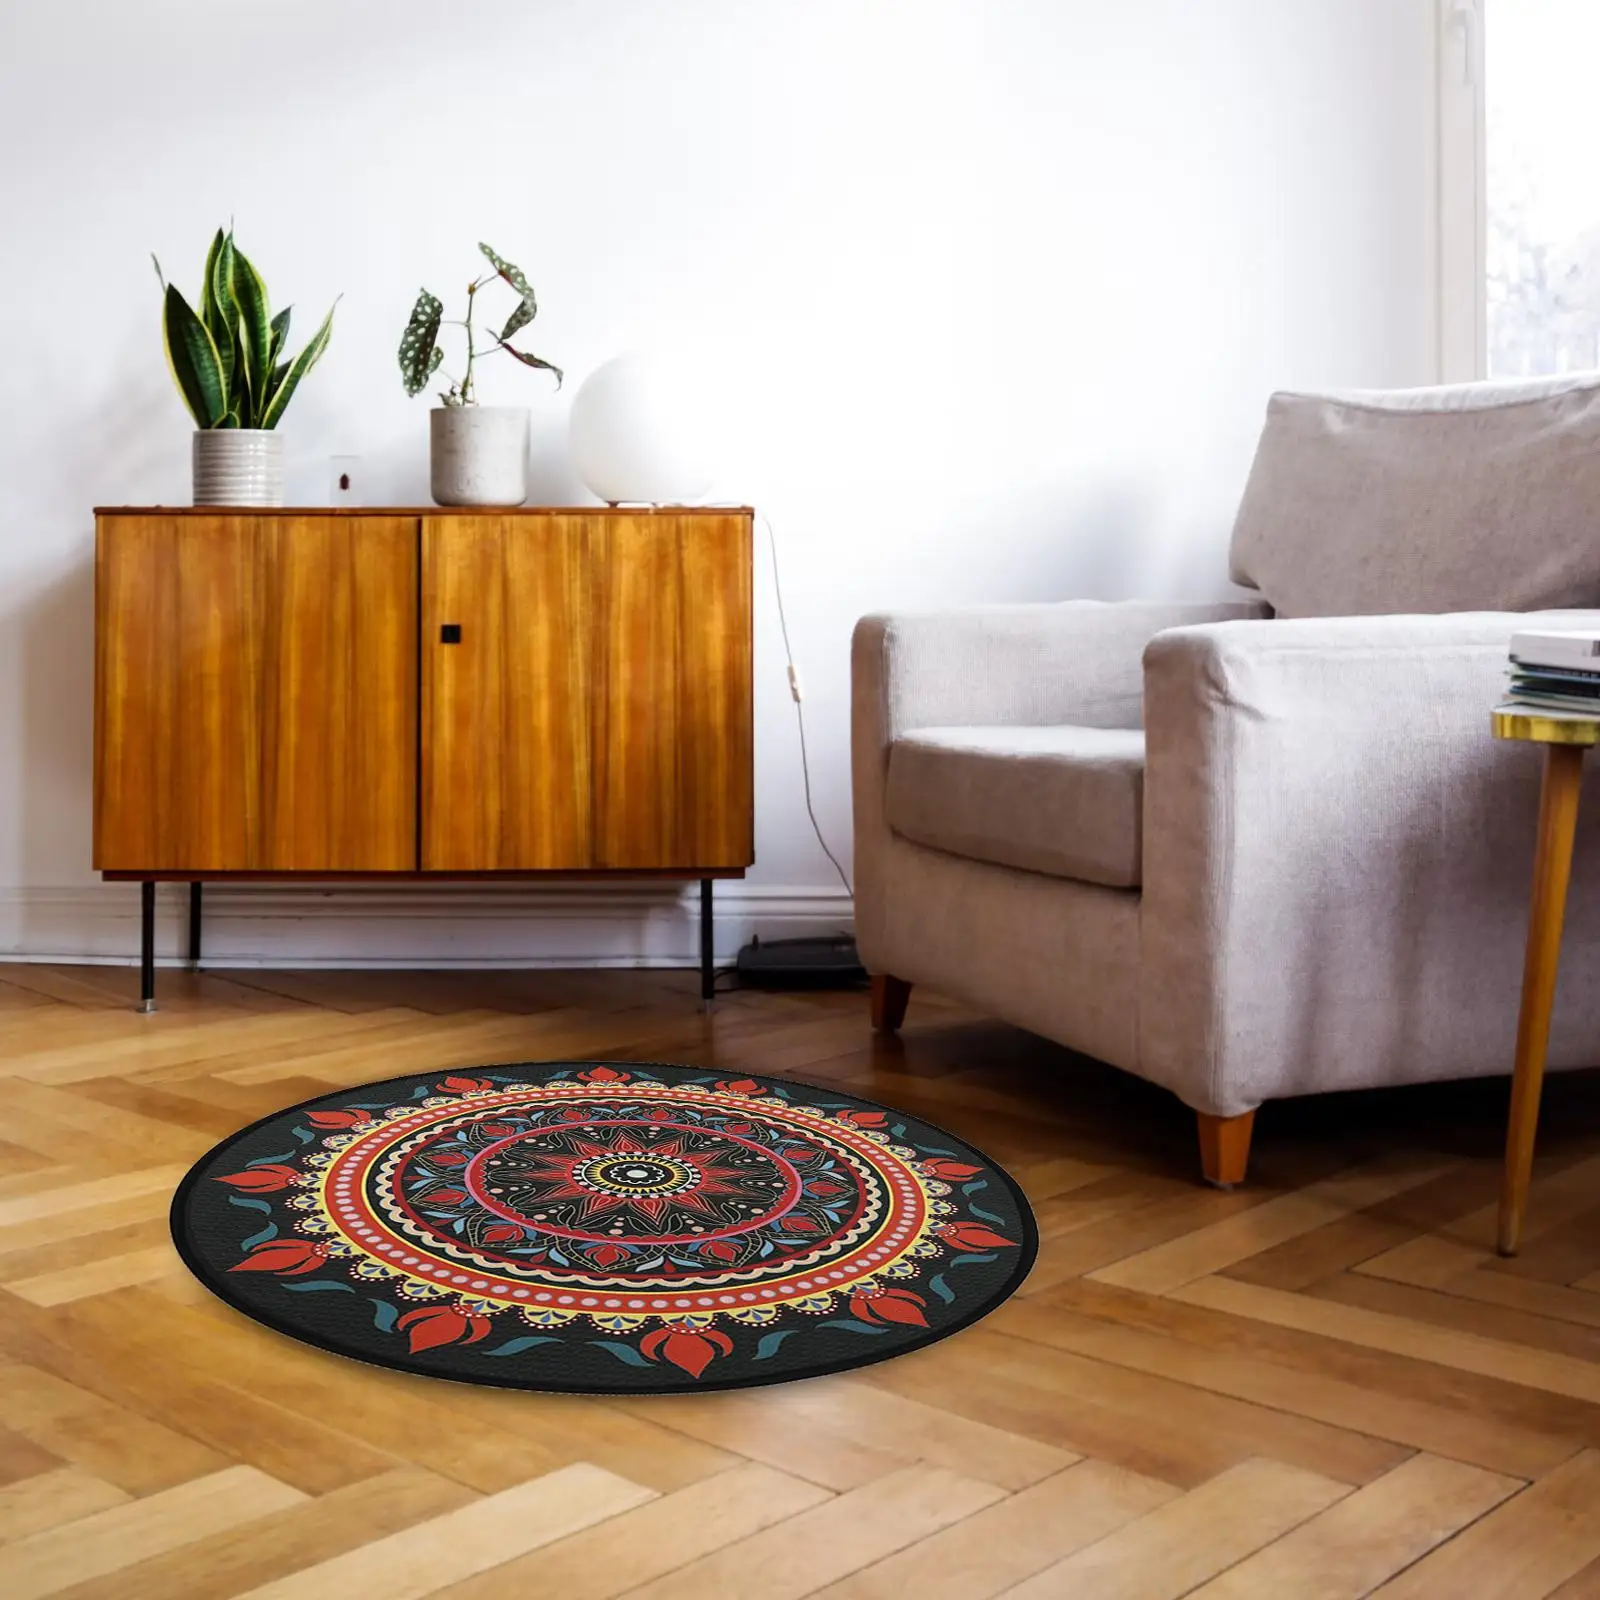 Mandala Pattern Round Yoga Floor Mat Meditation Mat Decorative Non Slip